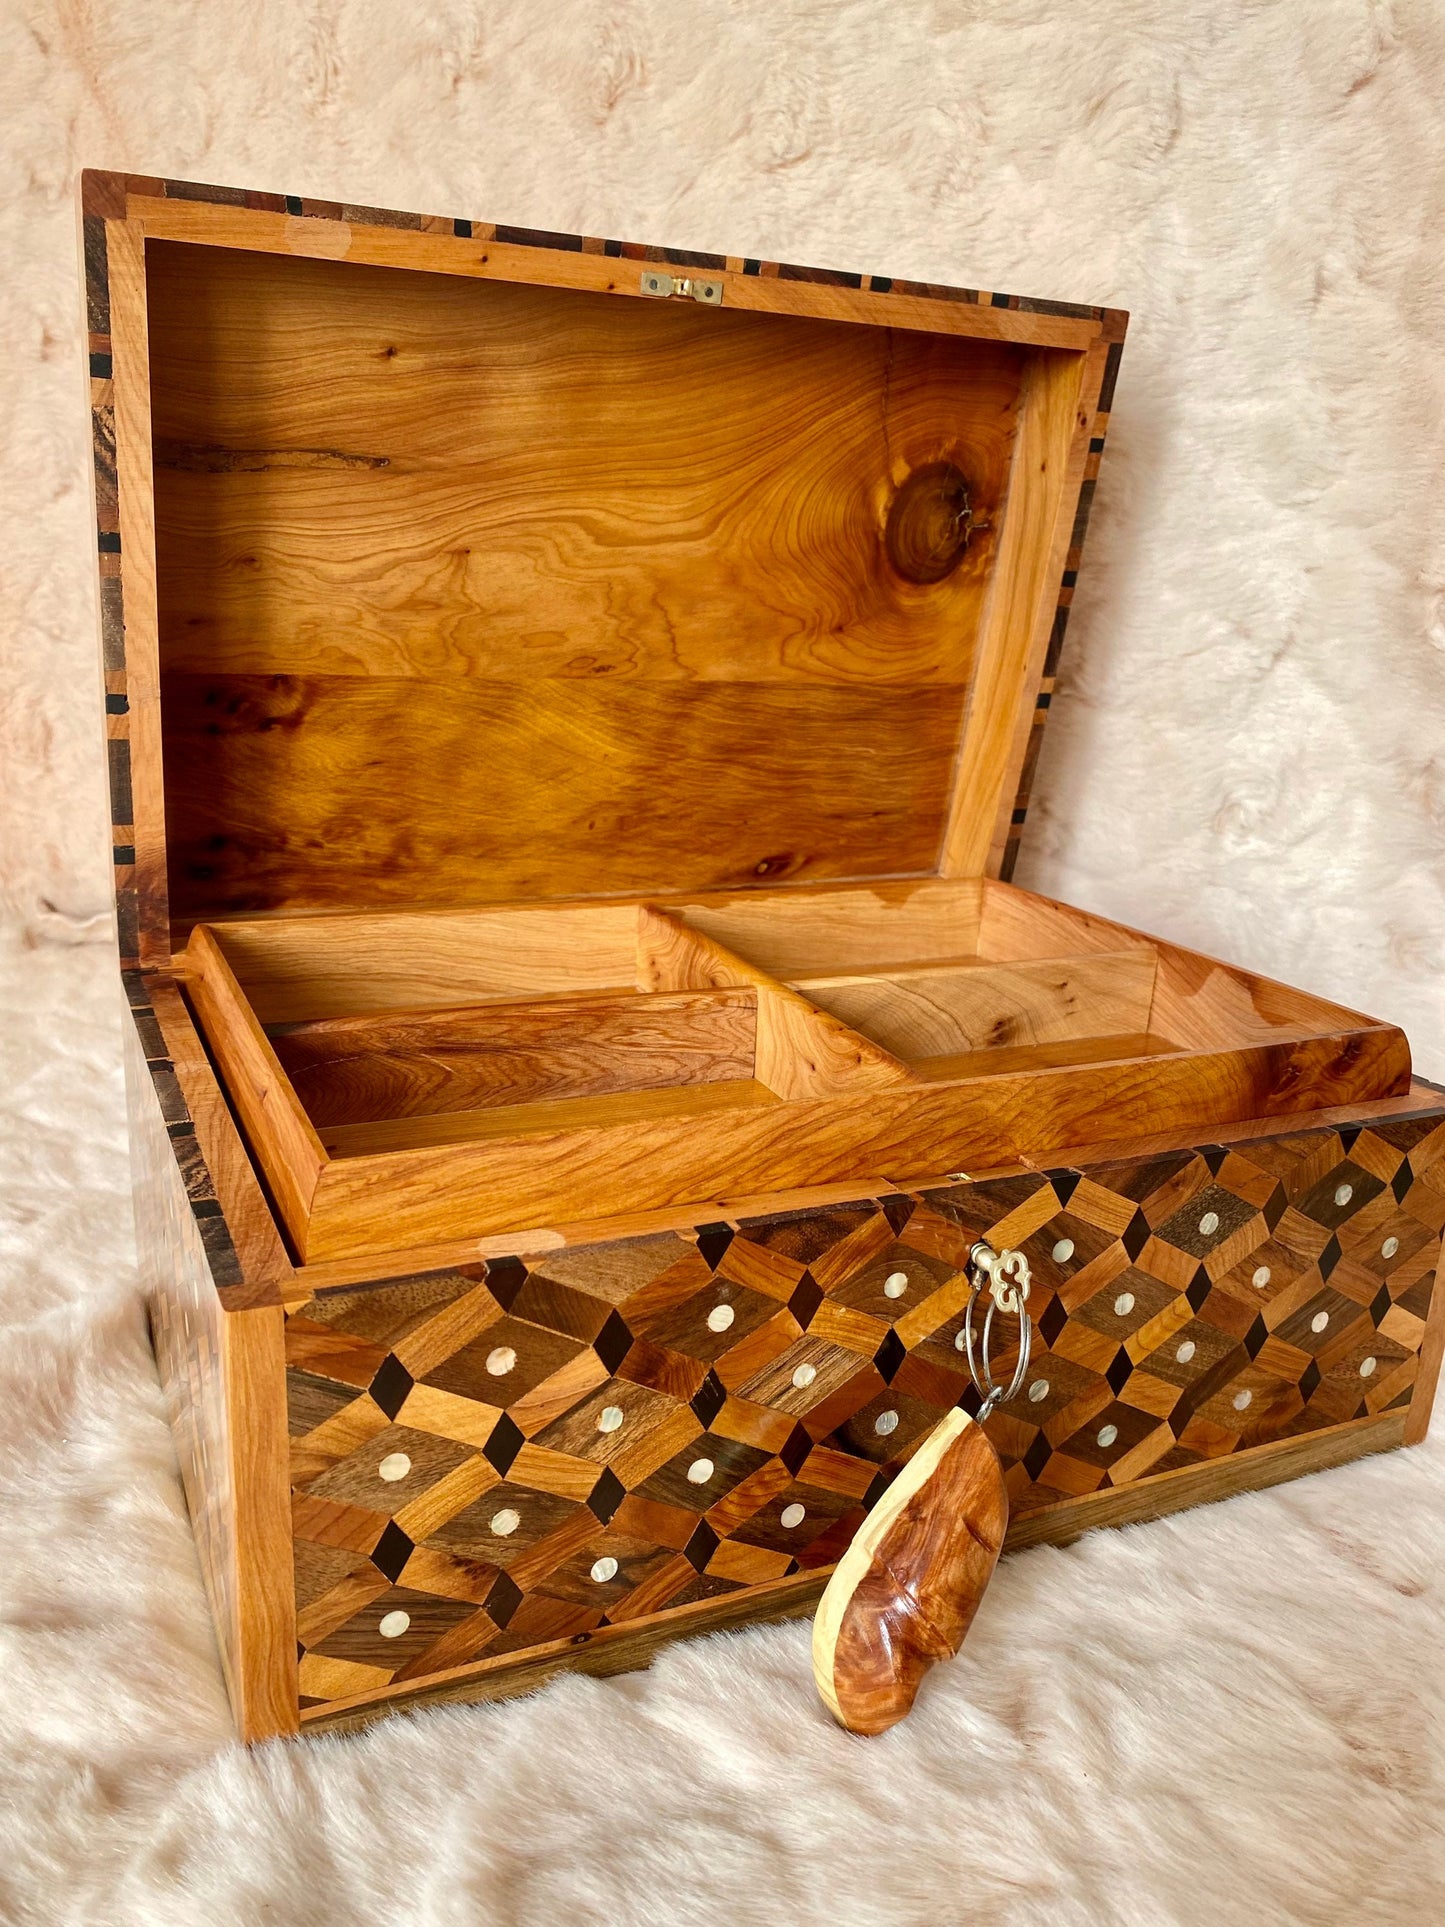 13x8 Royal large lockable Jewelry Wood watch Box, big jewellery Thuya wooden Keepsake Storage Inlaid with Mother of pearls,walnut,lemon wood